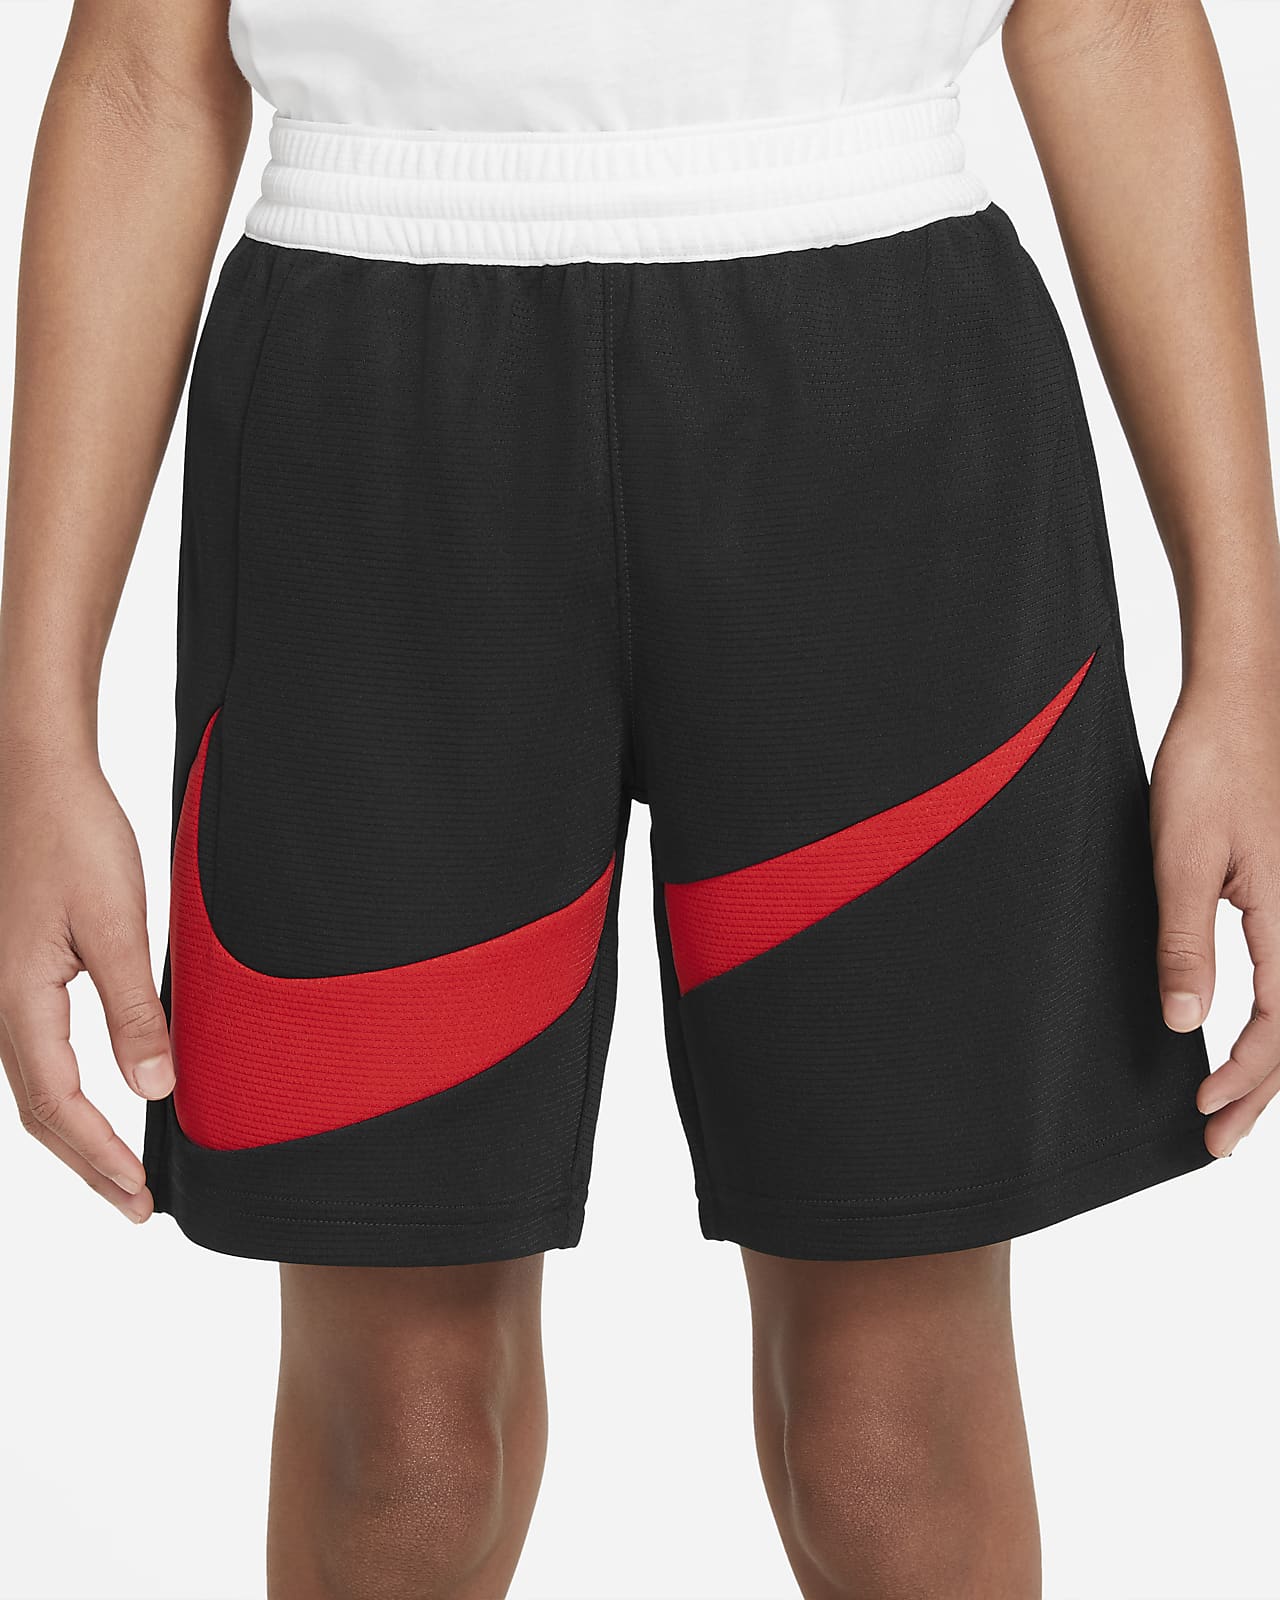 boys red basketball shorts